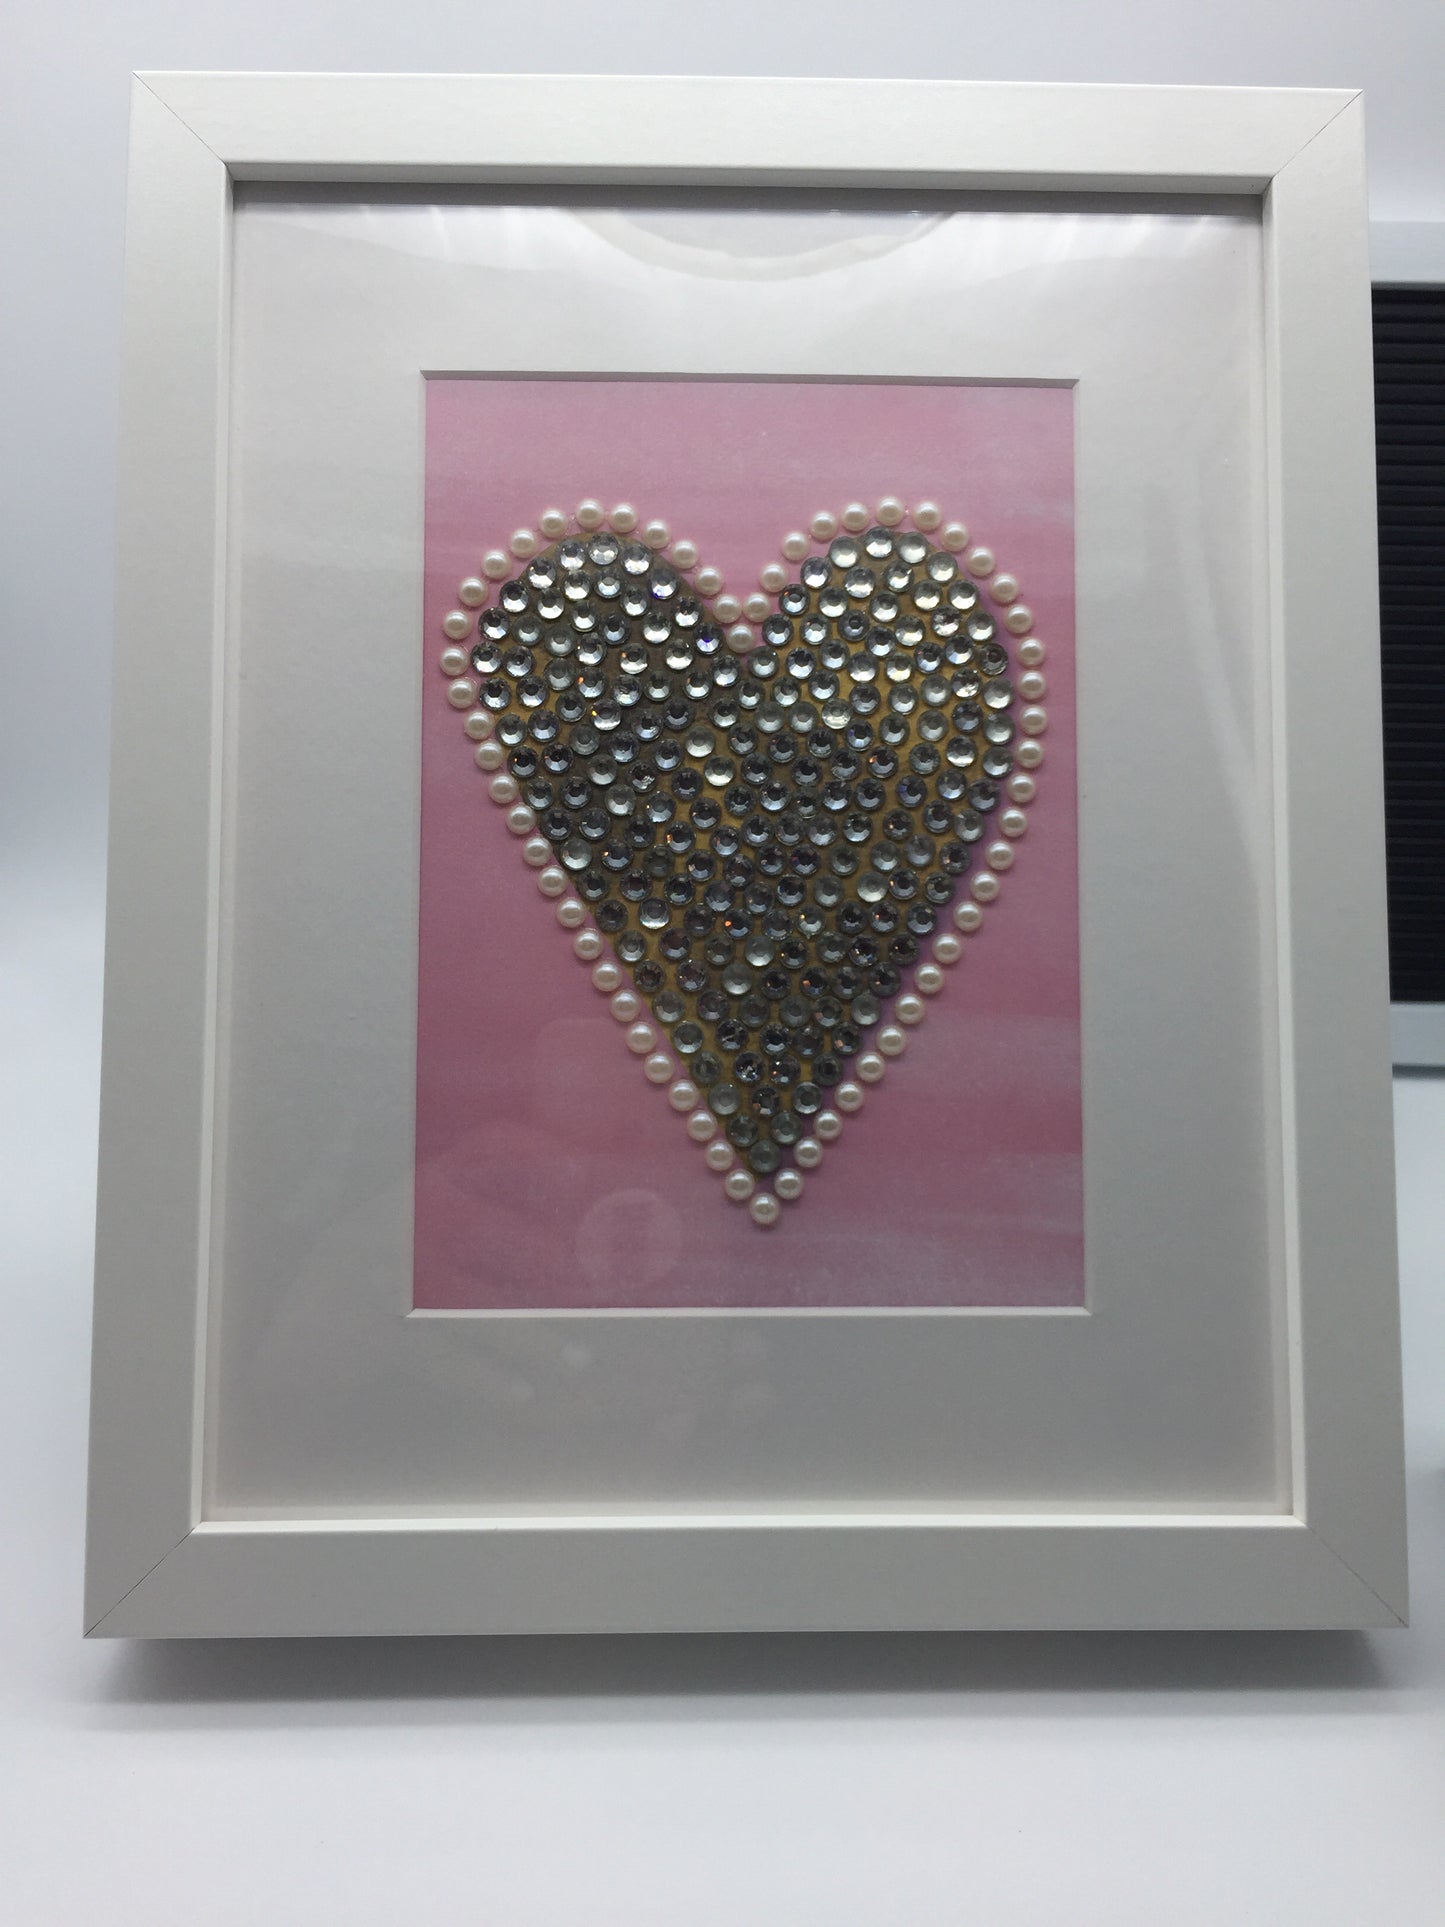 Framed sparkly “I love you” heart 5x7 pink background